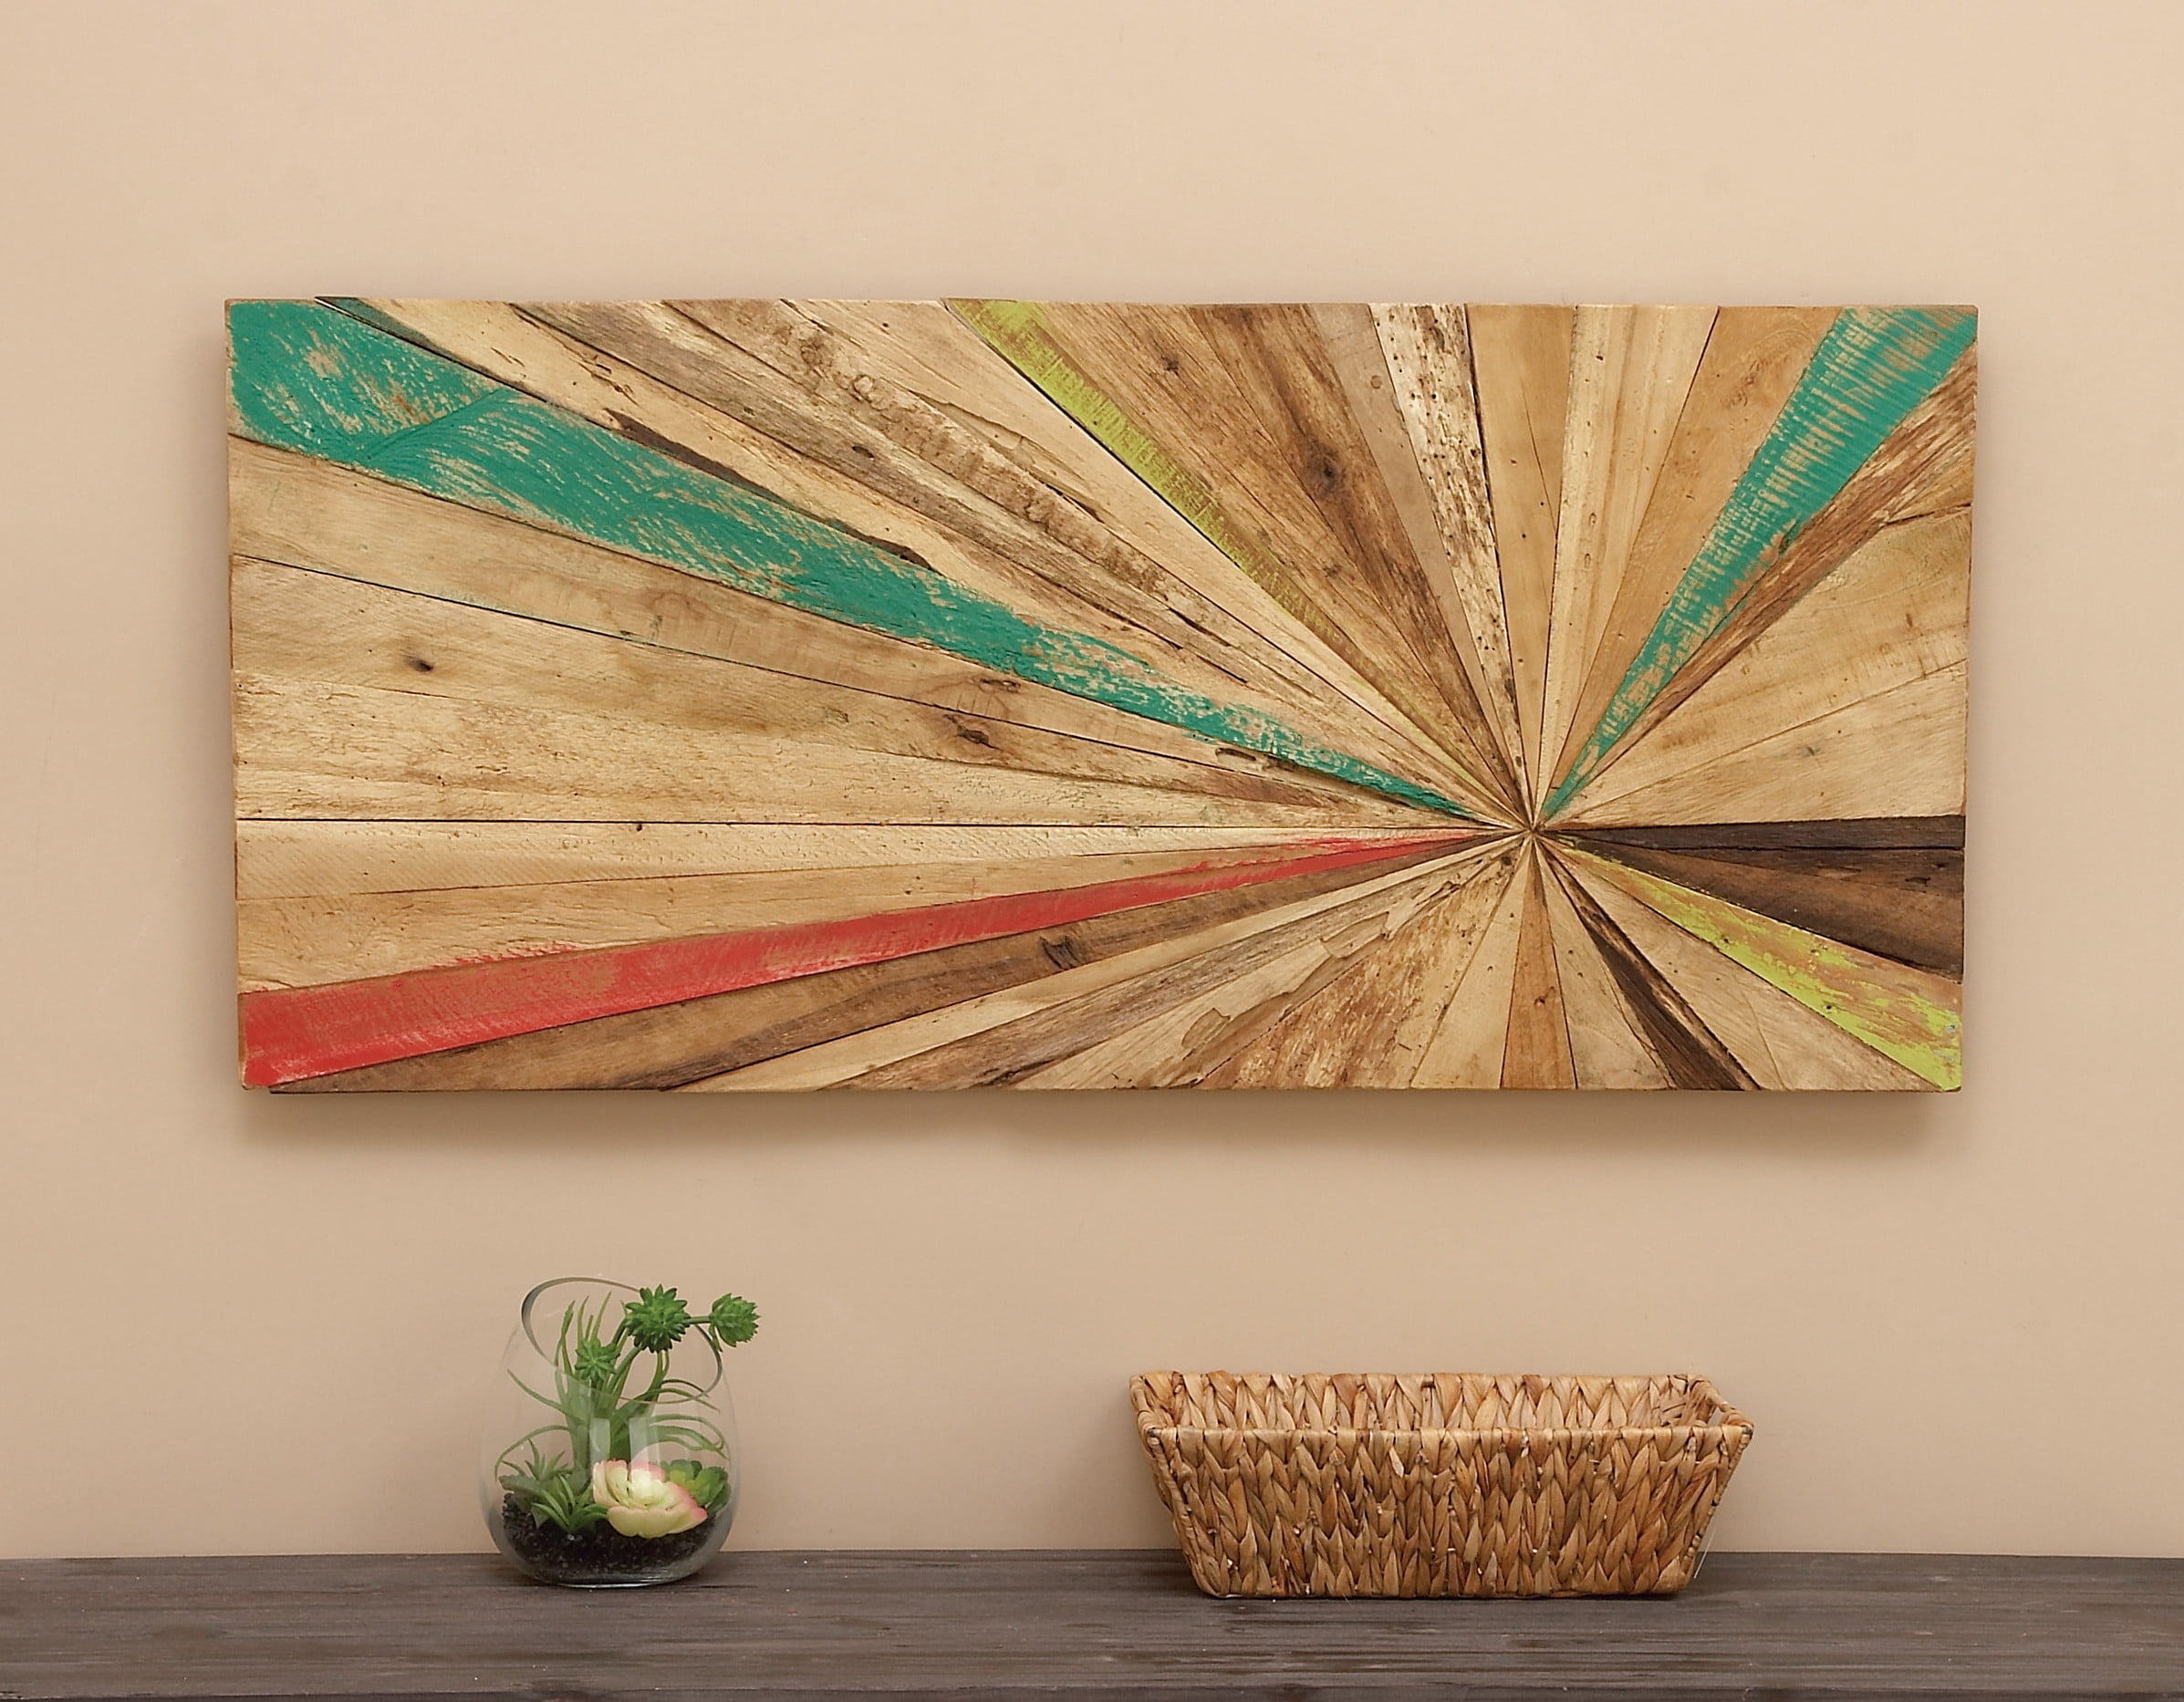 DecMode Eclectic Reclaimed Wood Sunburst Wall Decor, 39" x